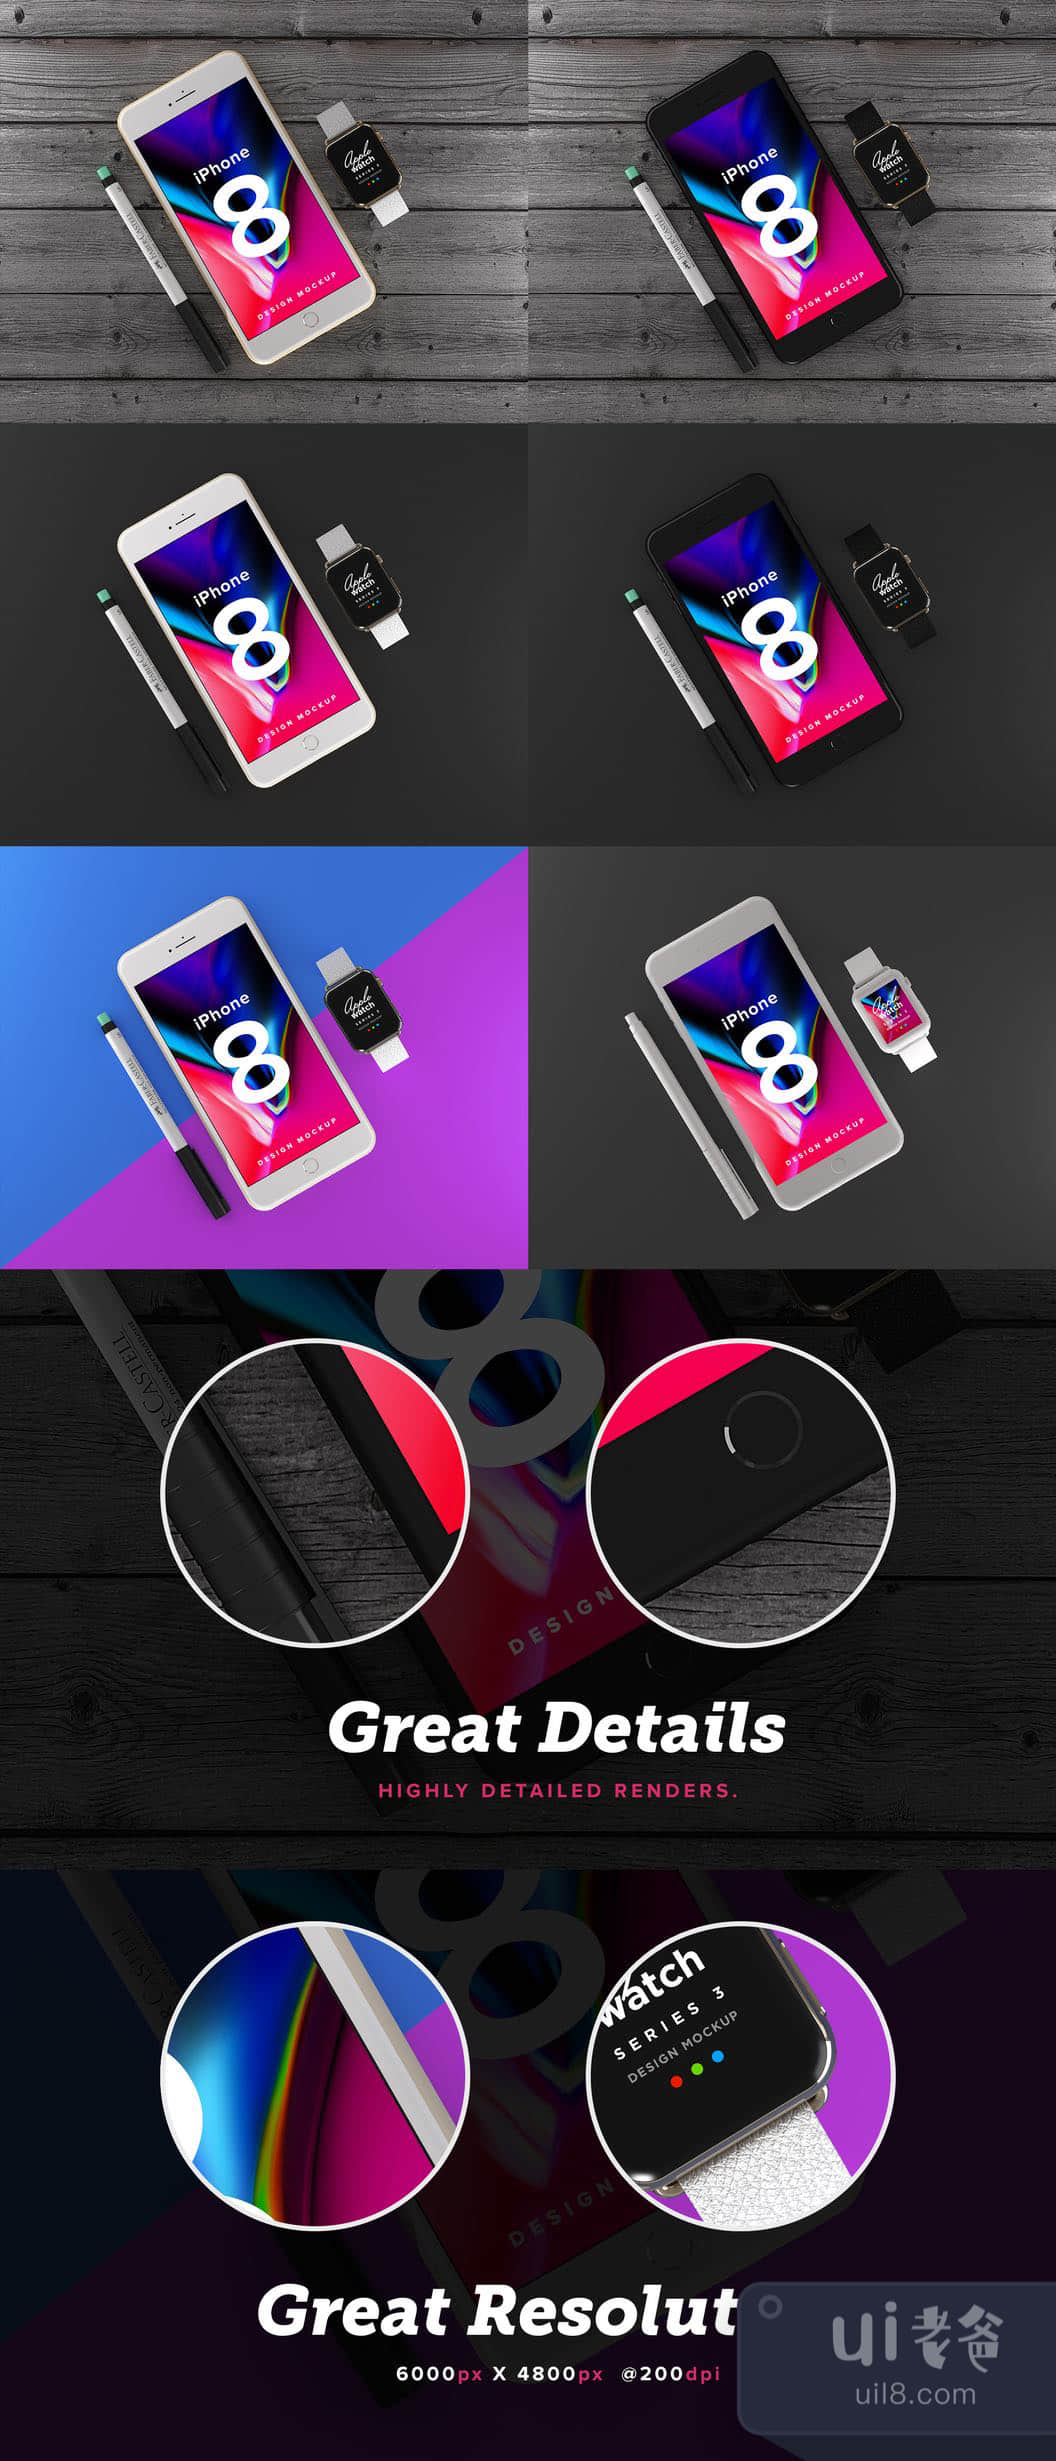 iPhone 8苹果手表设计 (iPhone 8 Apple Watch Design)插图